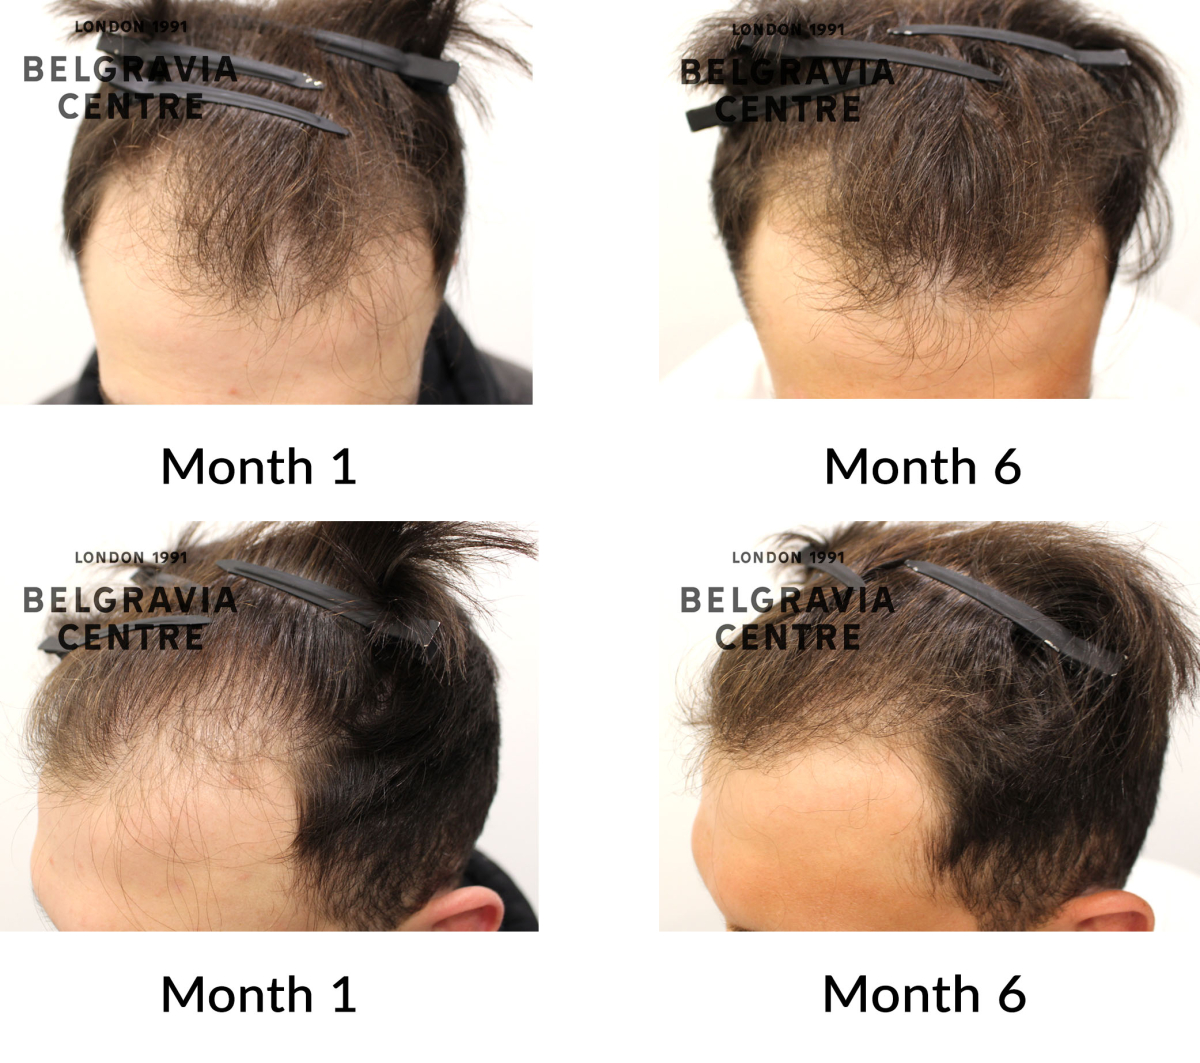 male pattern hair loss the belgravia centre 443860